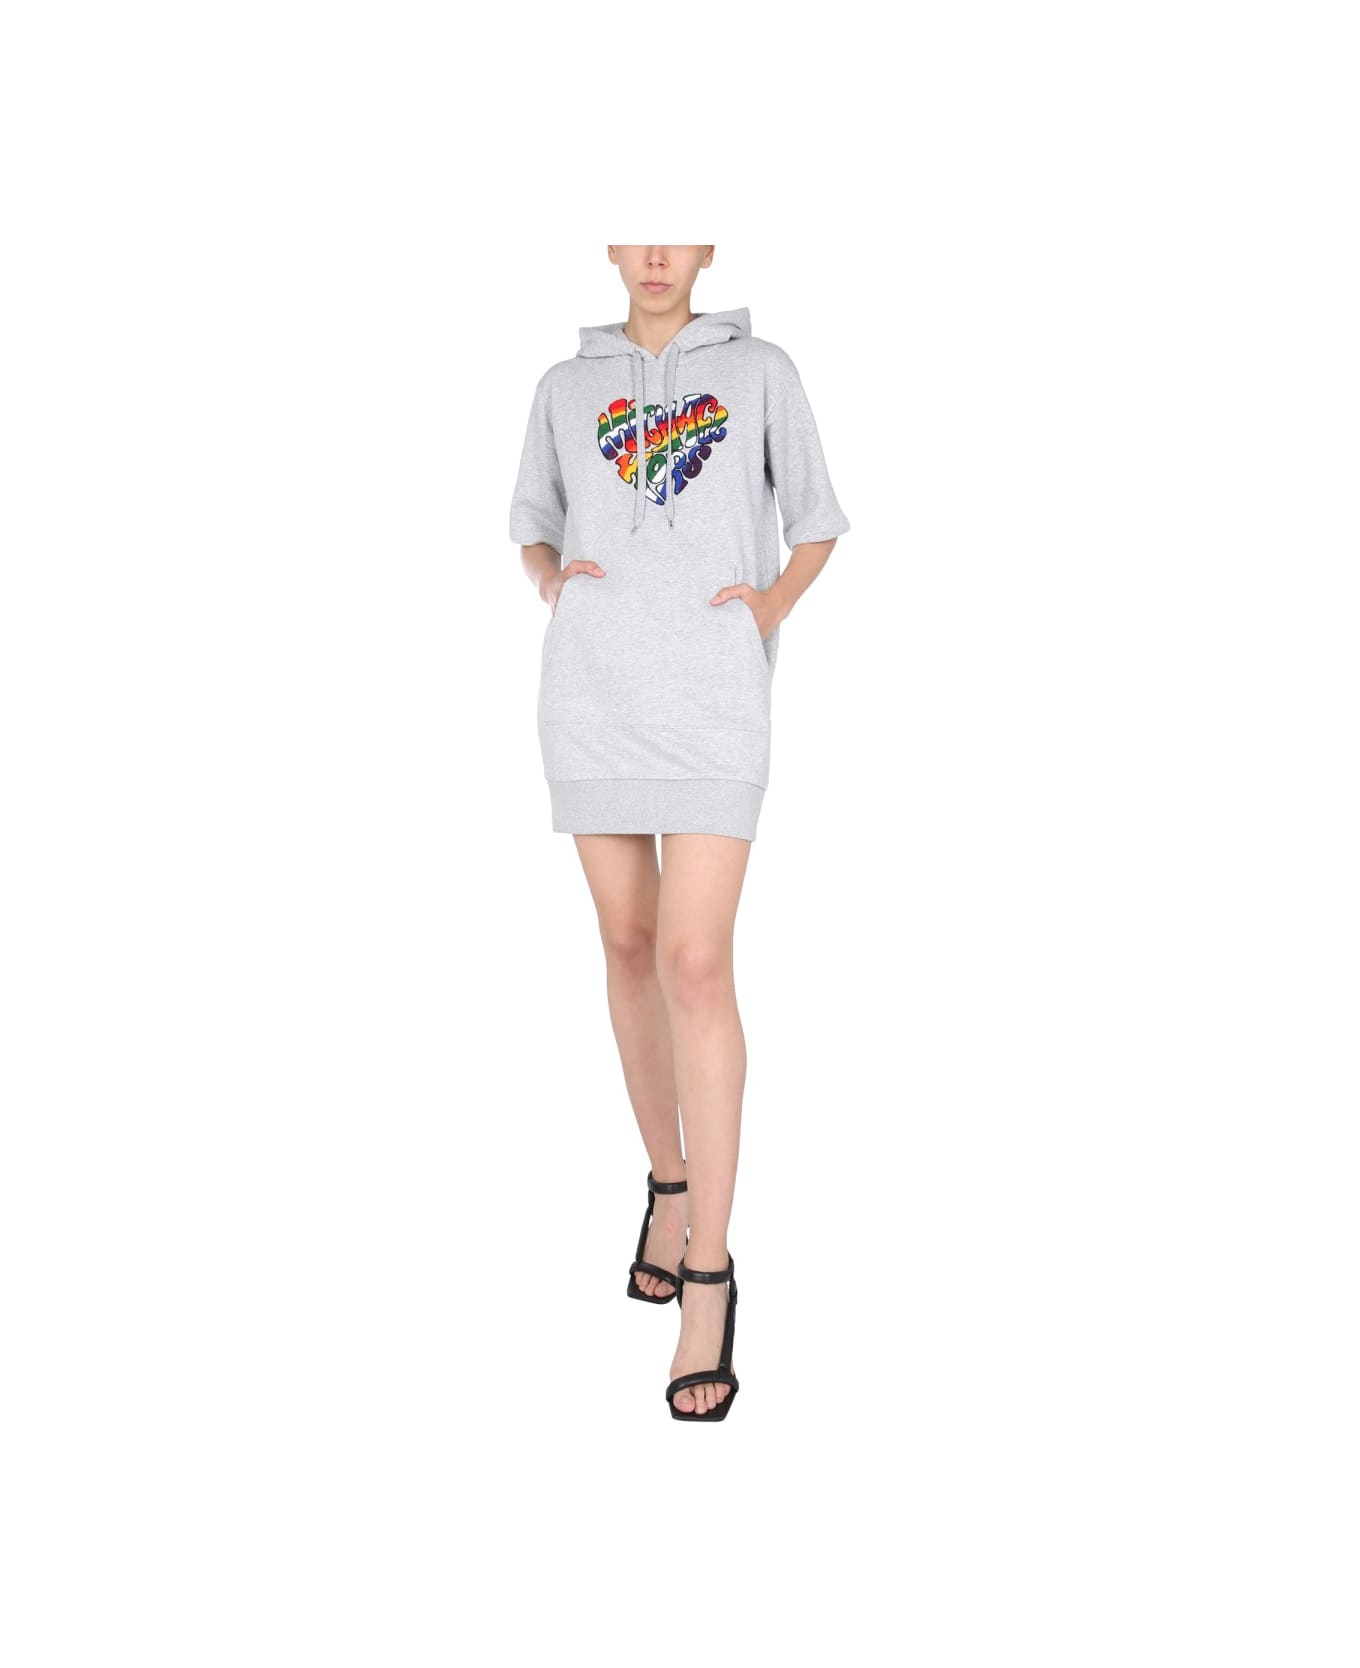 Michael Kors Dress With Pride Heart Logo - GREY